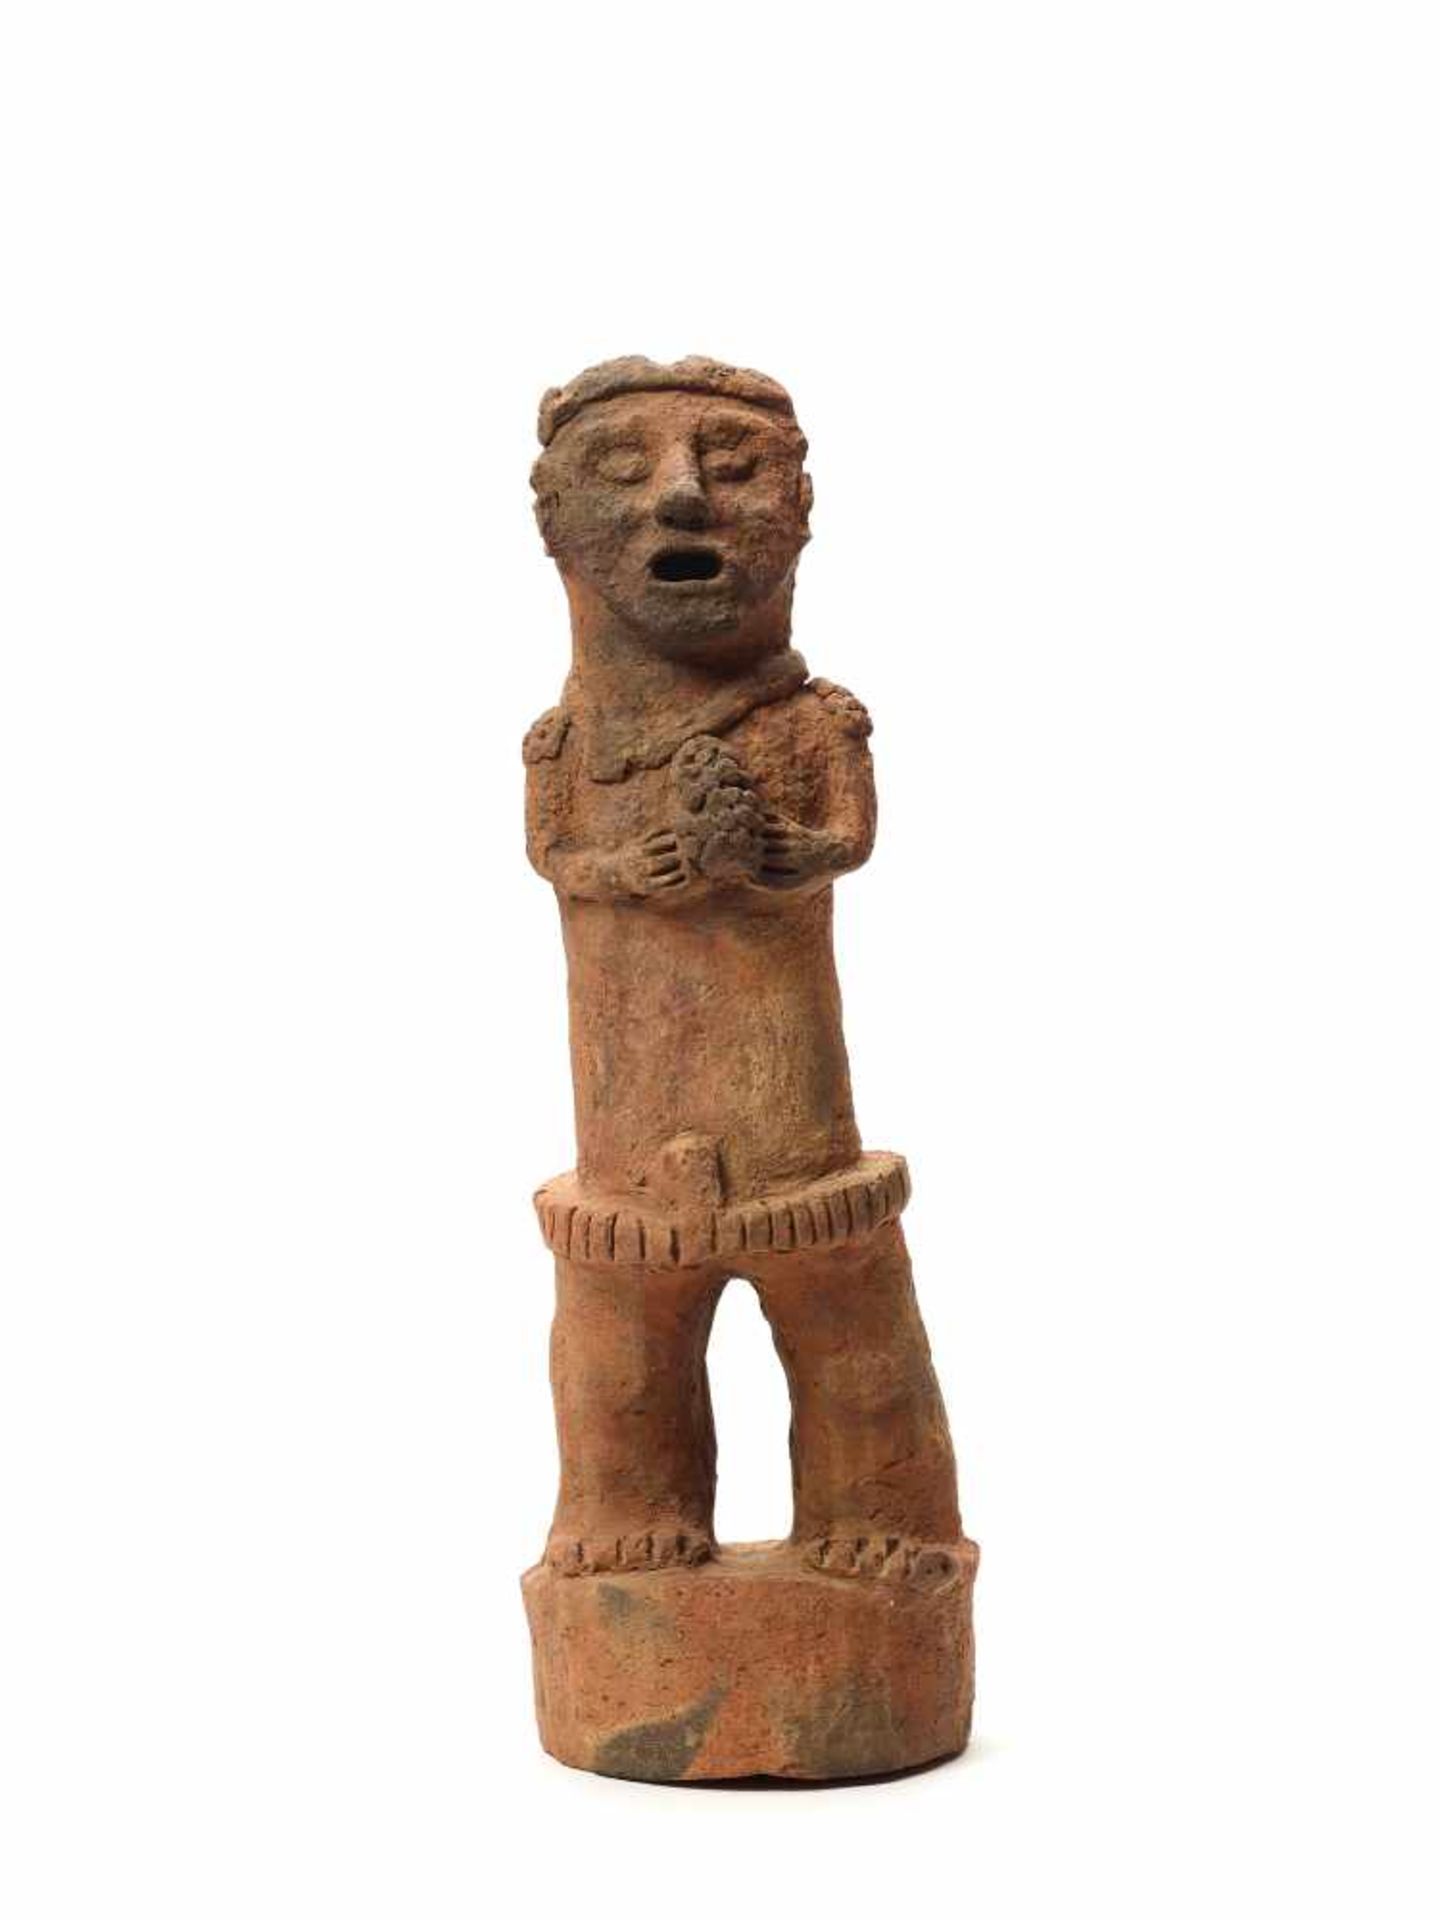 TL-TESTED STANDING FIGURE ON PEDESTAL - MAYA CIVILIZATION, GUATEMALA, C. 13TH CENTURYRed clayMaya